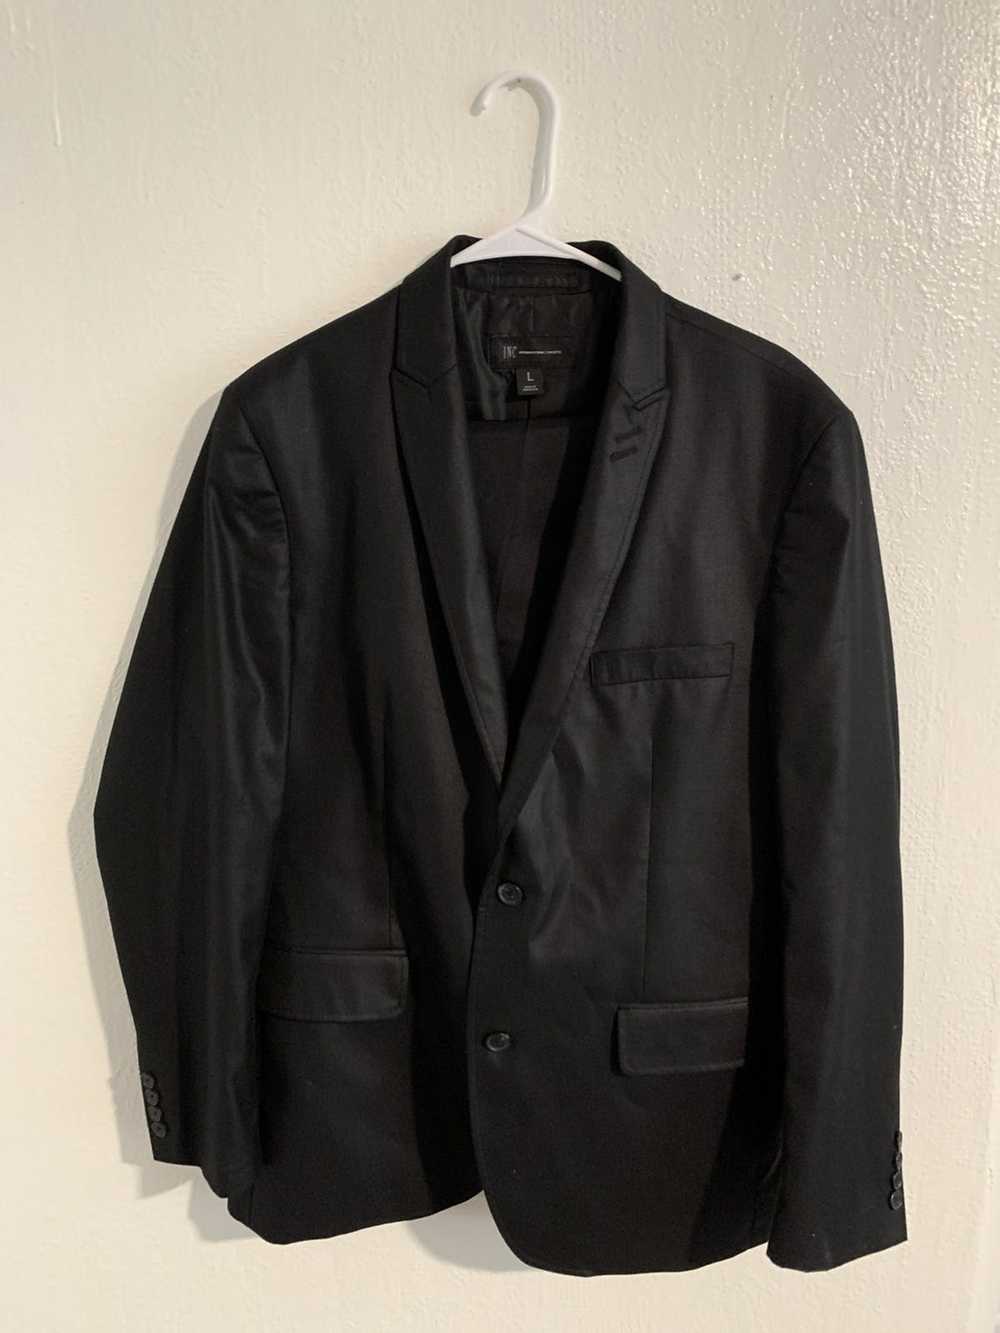 I.N.C I.N.C. Suit in black (blazer & trouser) - image 1